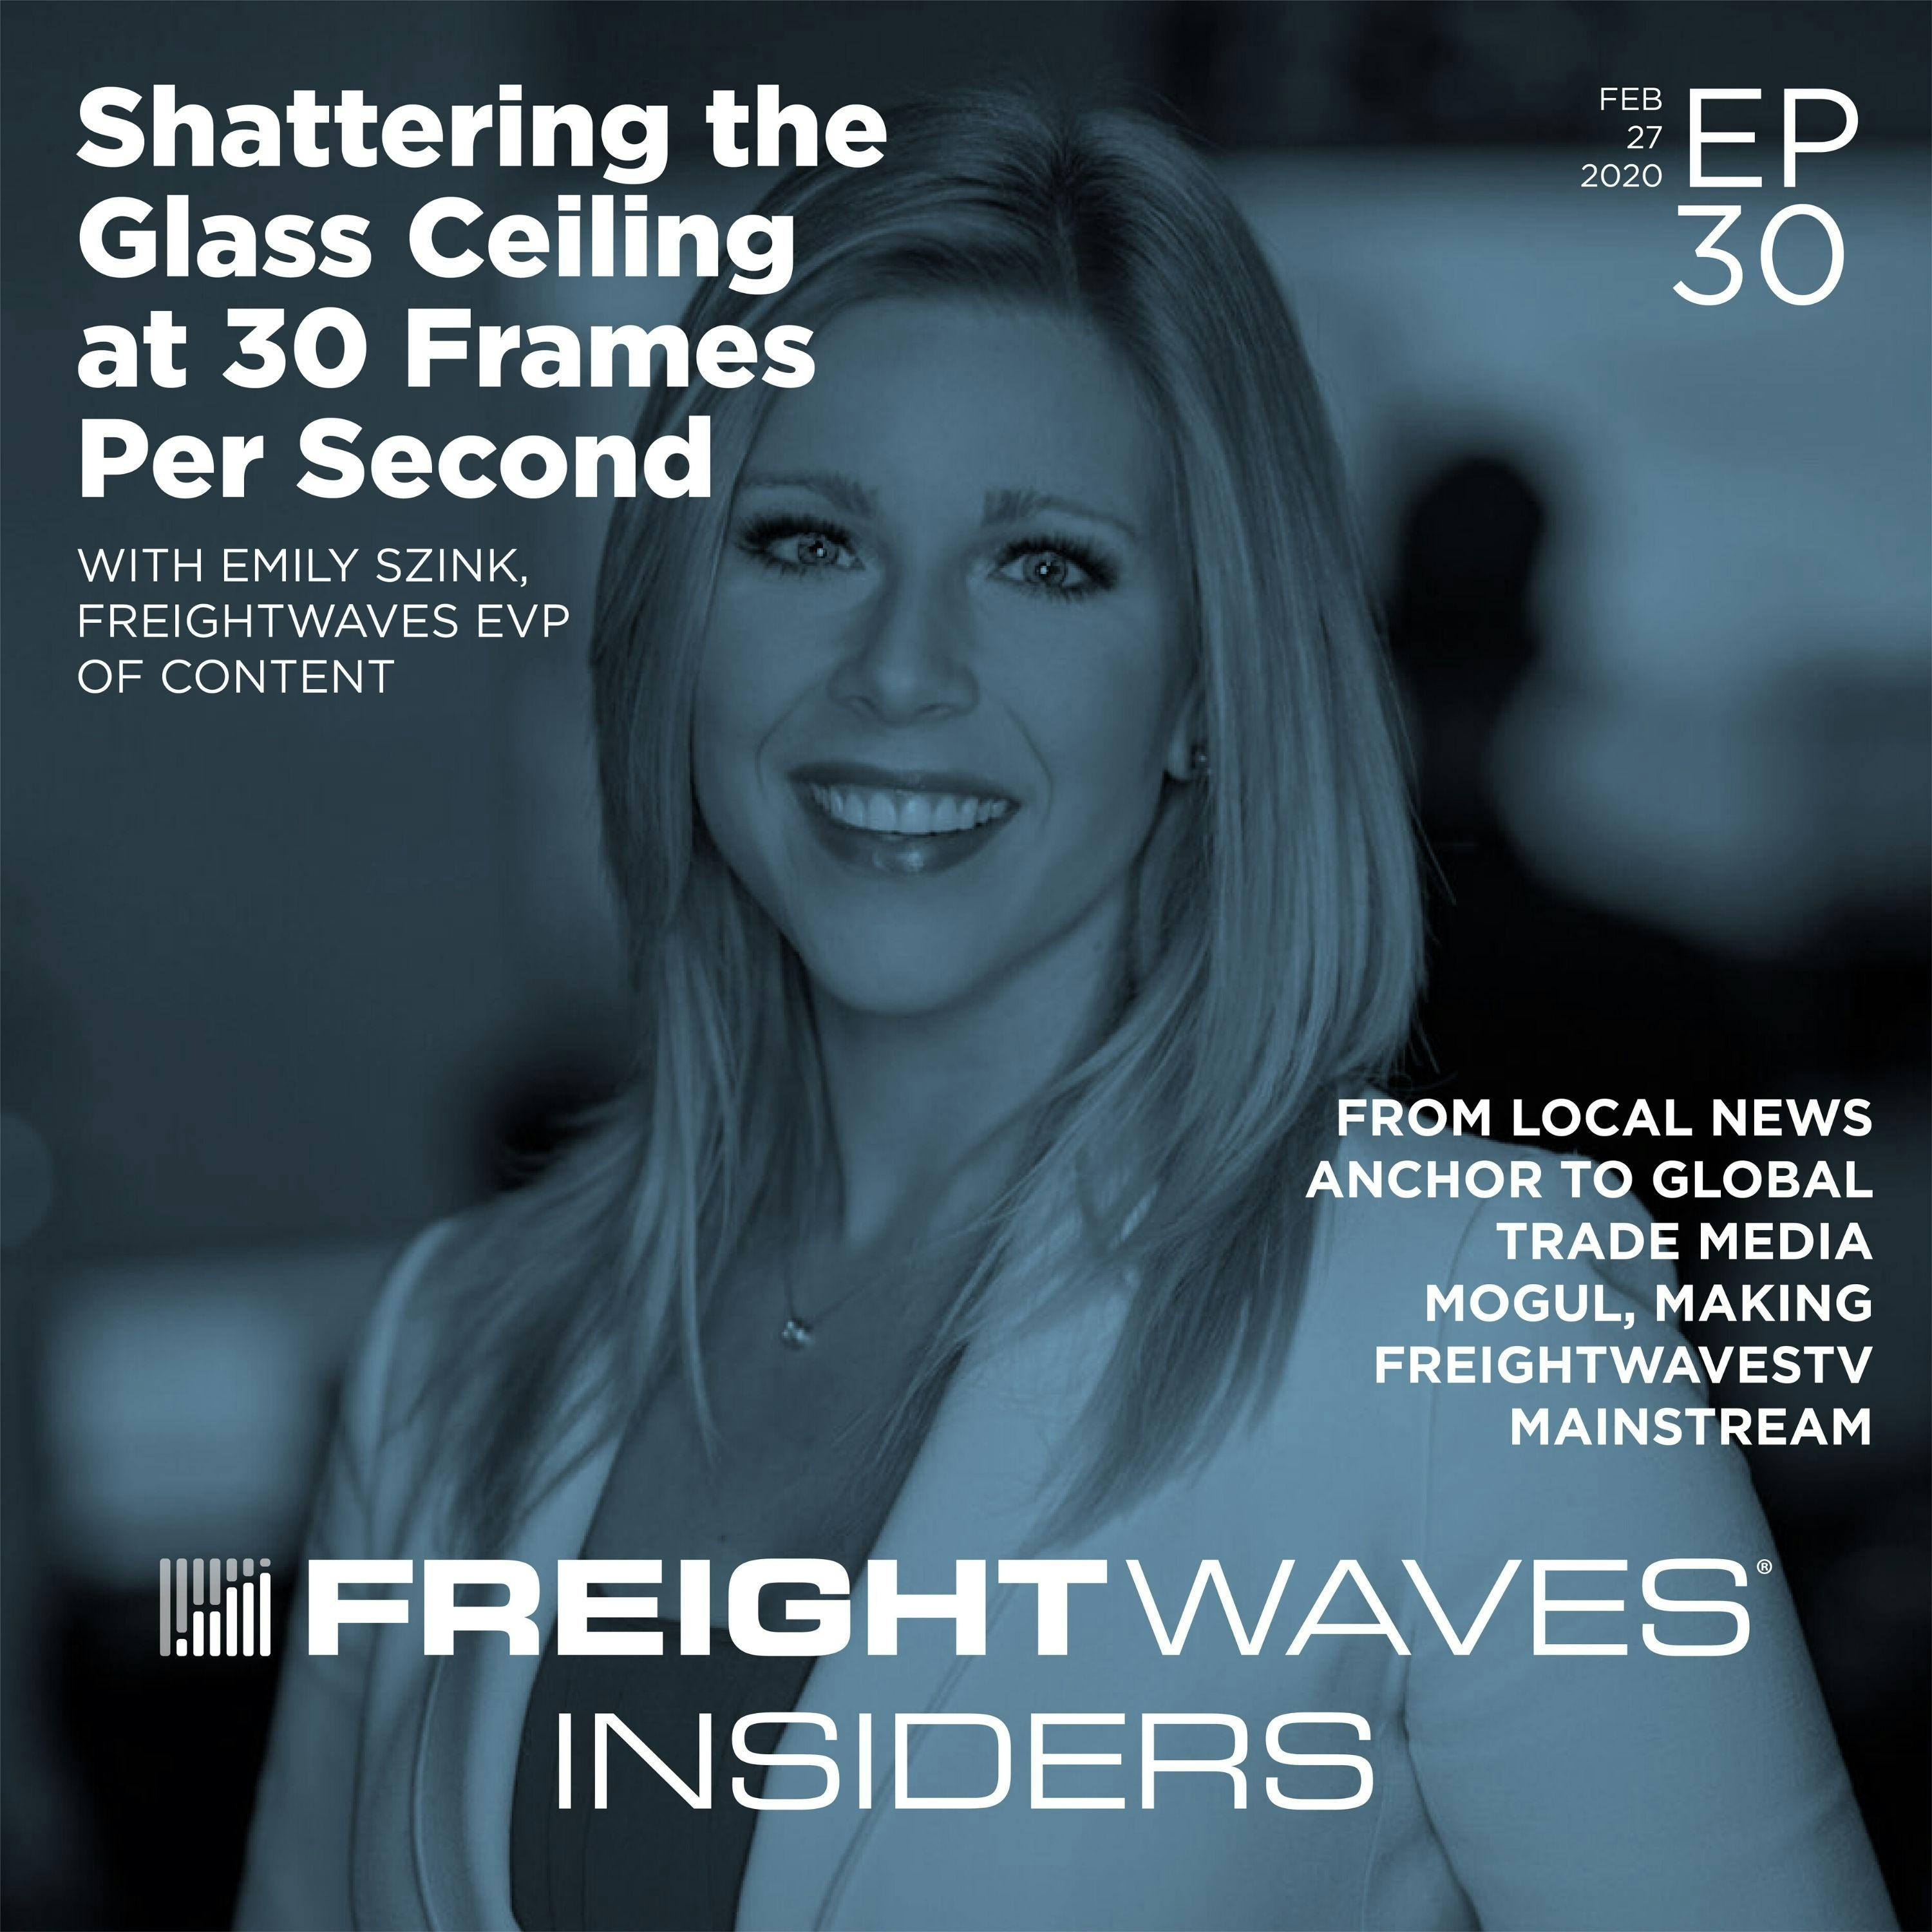 Making FreightWavesTV mainstream with Emily Szink